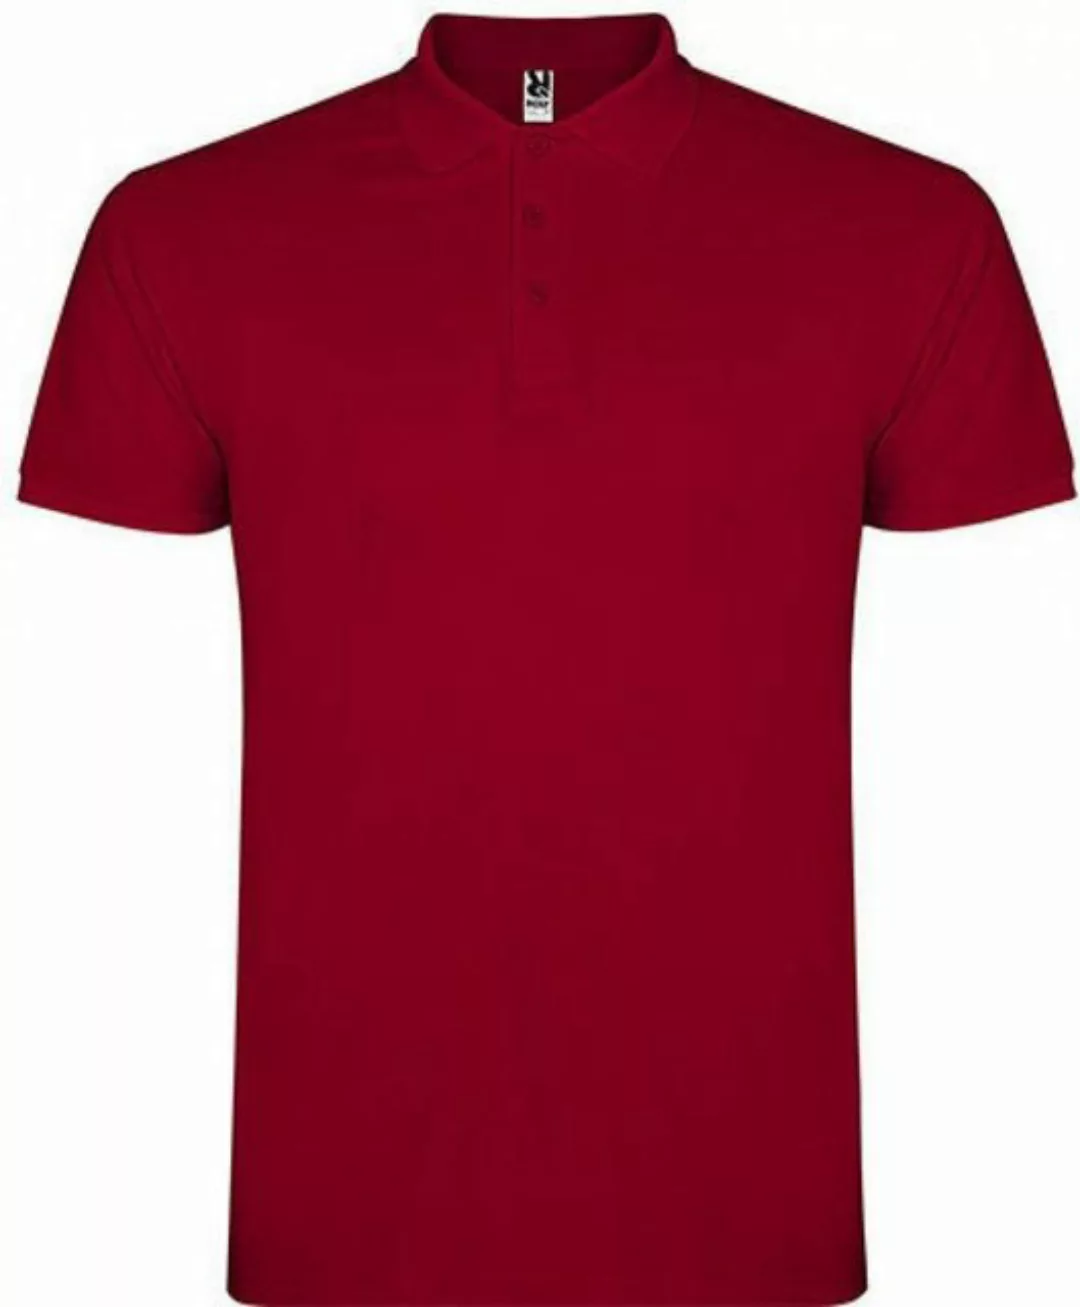 Roly Poloshirt Herren Star Poloshirt, Piqué günstig online kaufen